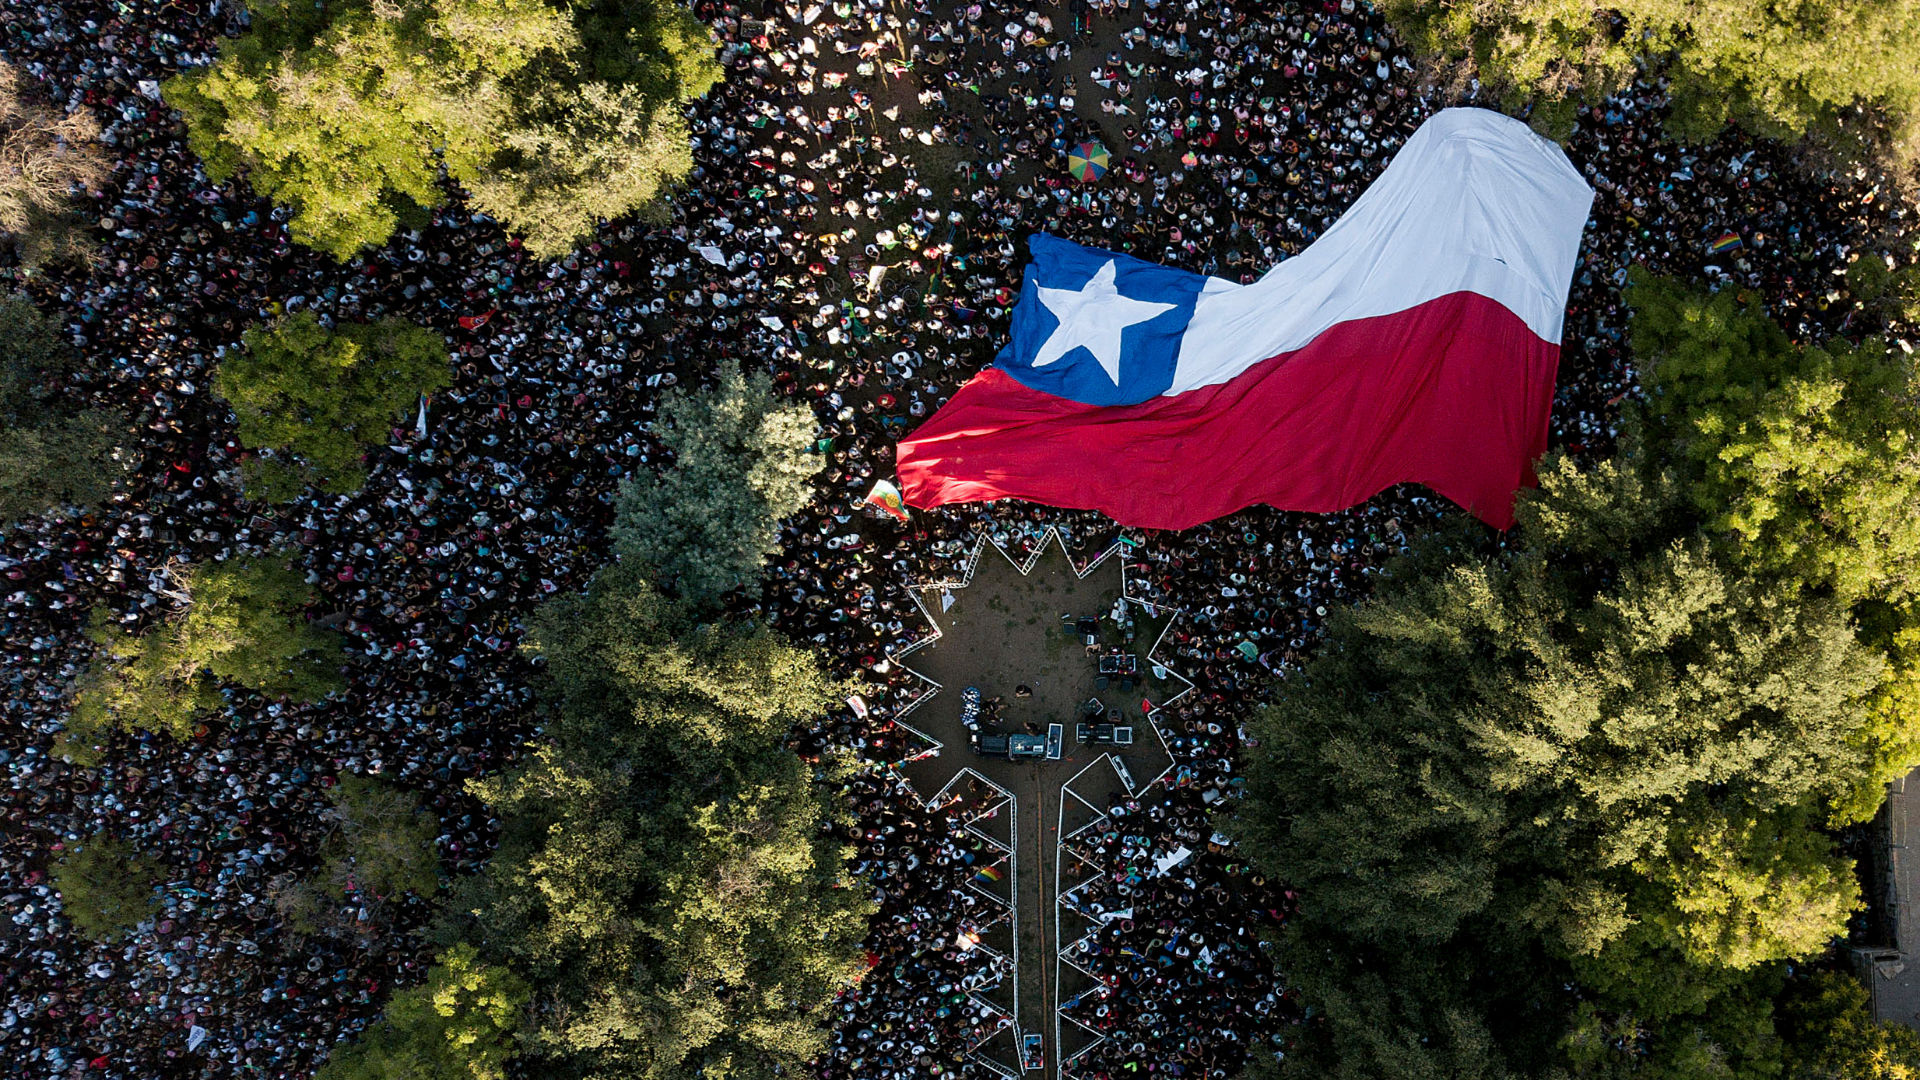 Chile vuelve a rechazar proyecto para cambiar su Constitución